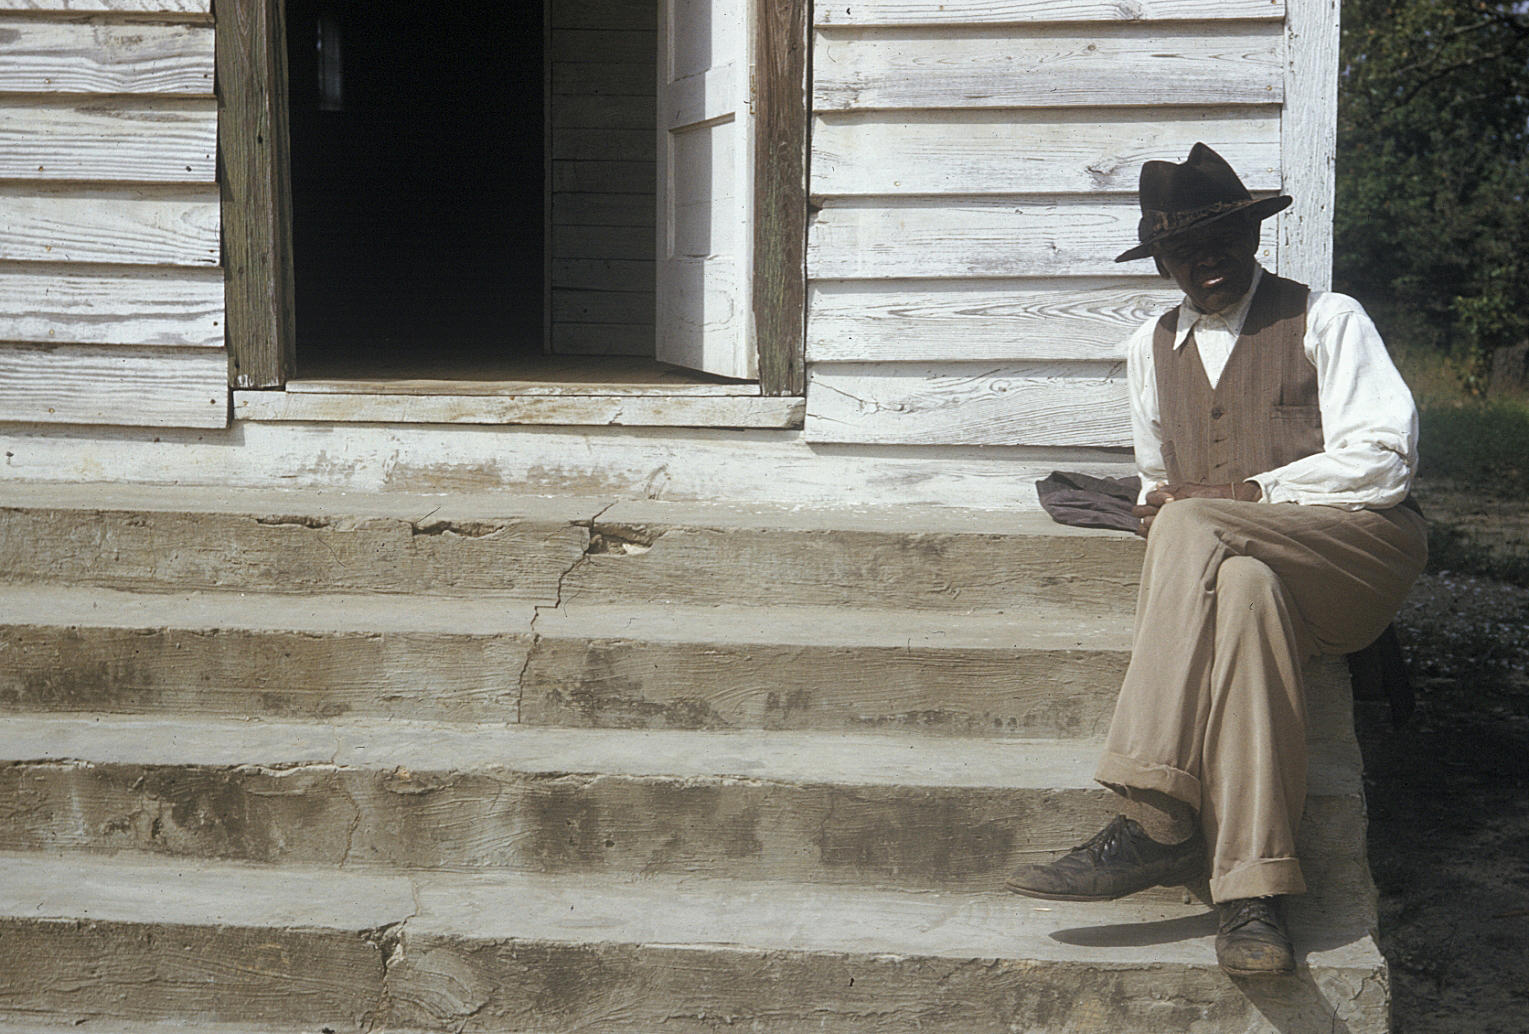 Tuskegee syphilis study descendants speak about tragedy, seek healing - CBS News